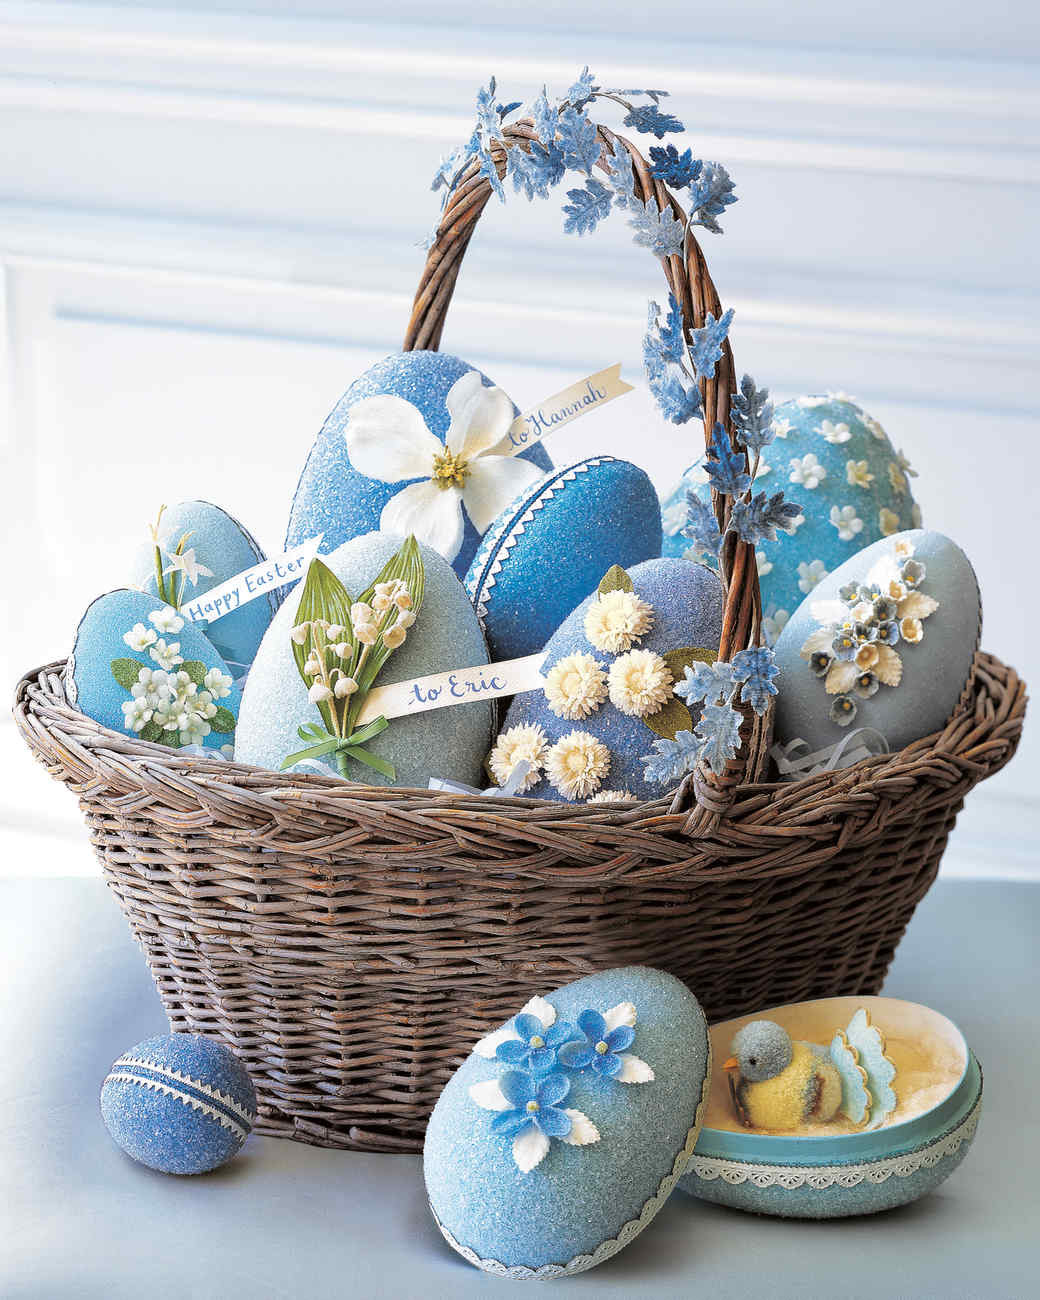 Best Easter Basket Ideas
 21 of Our Best Easter Basket Ideas